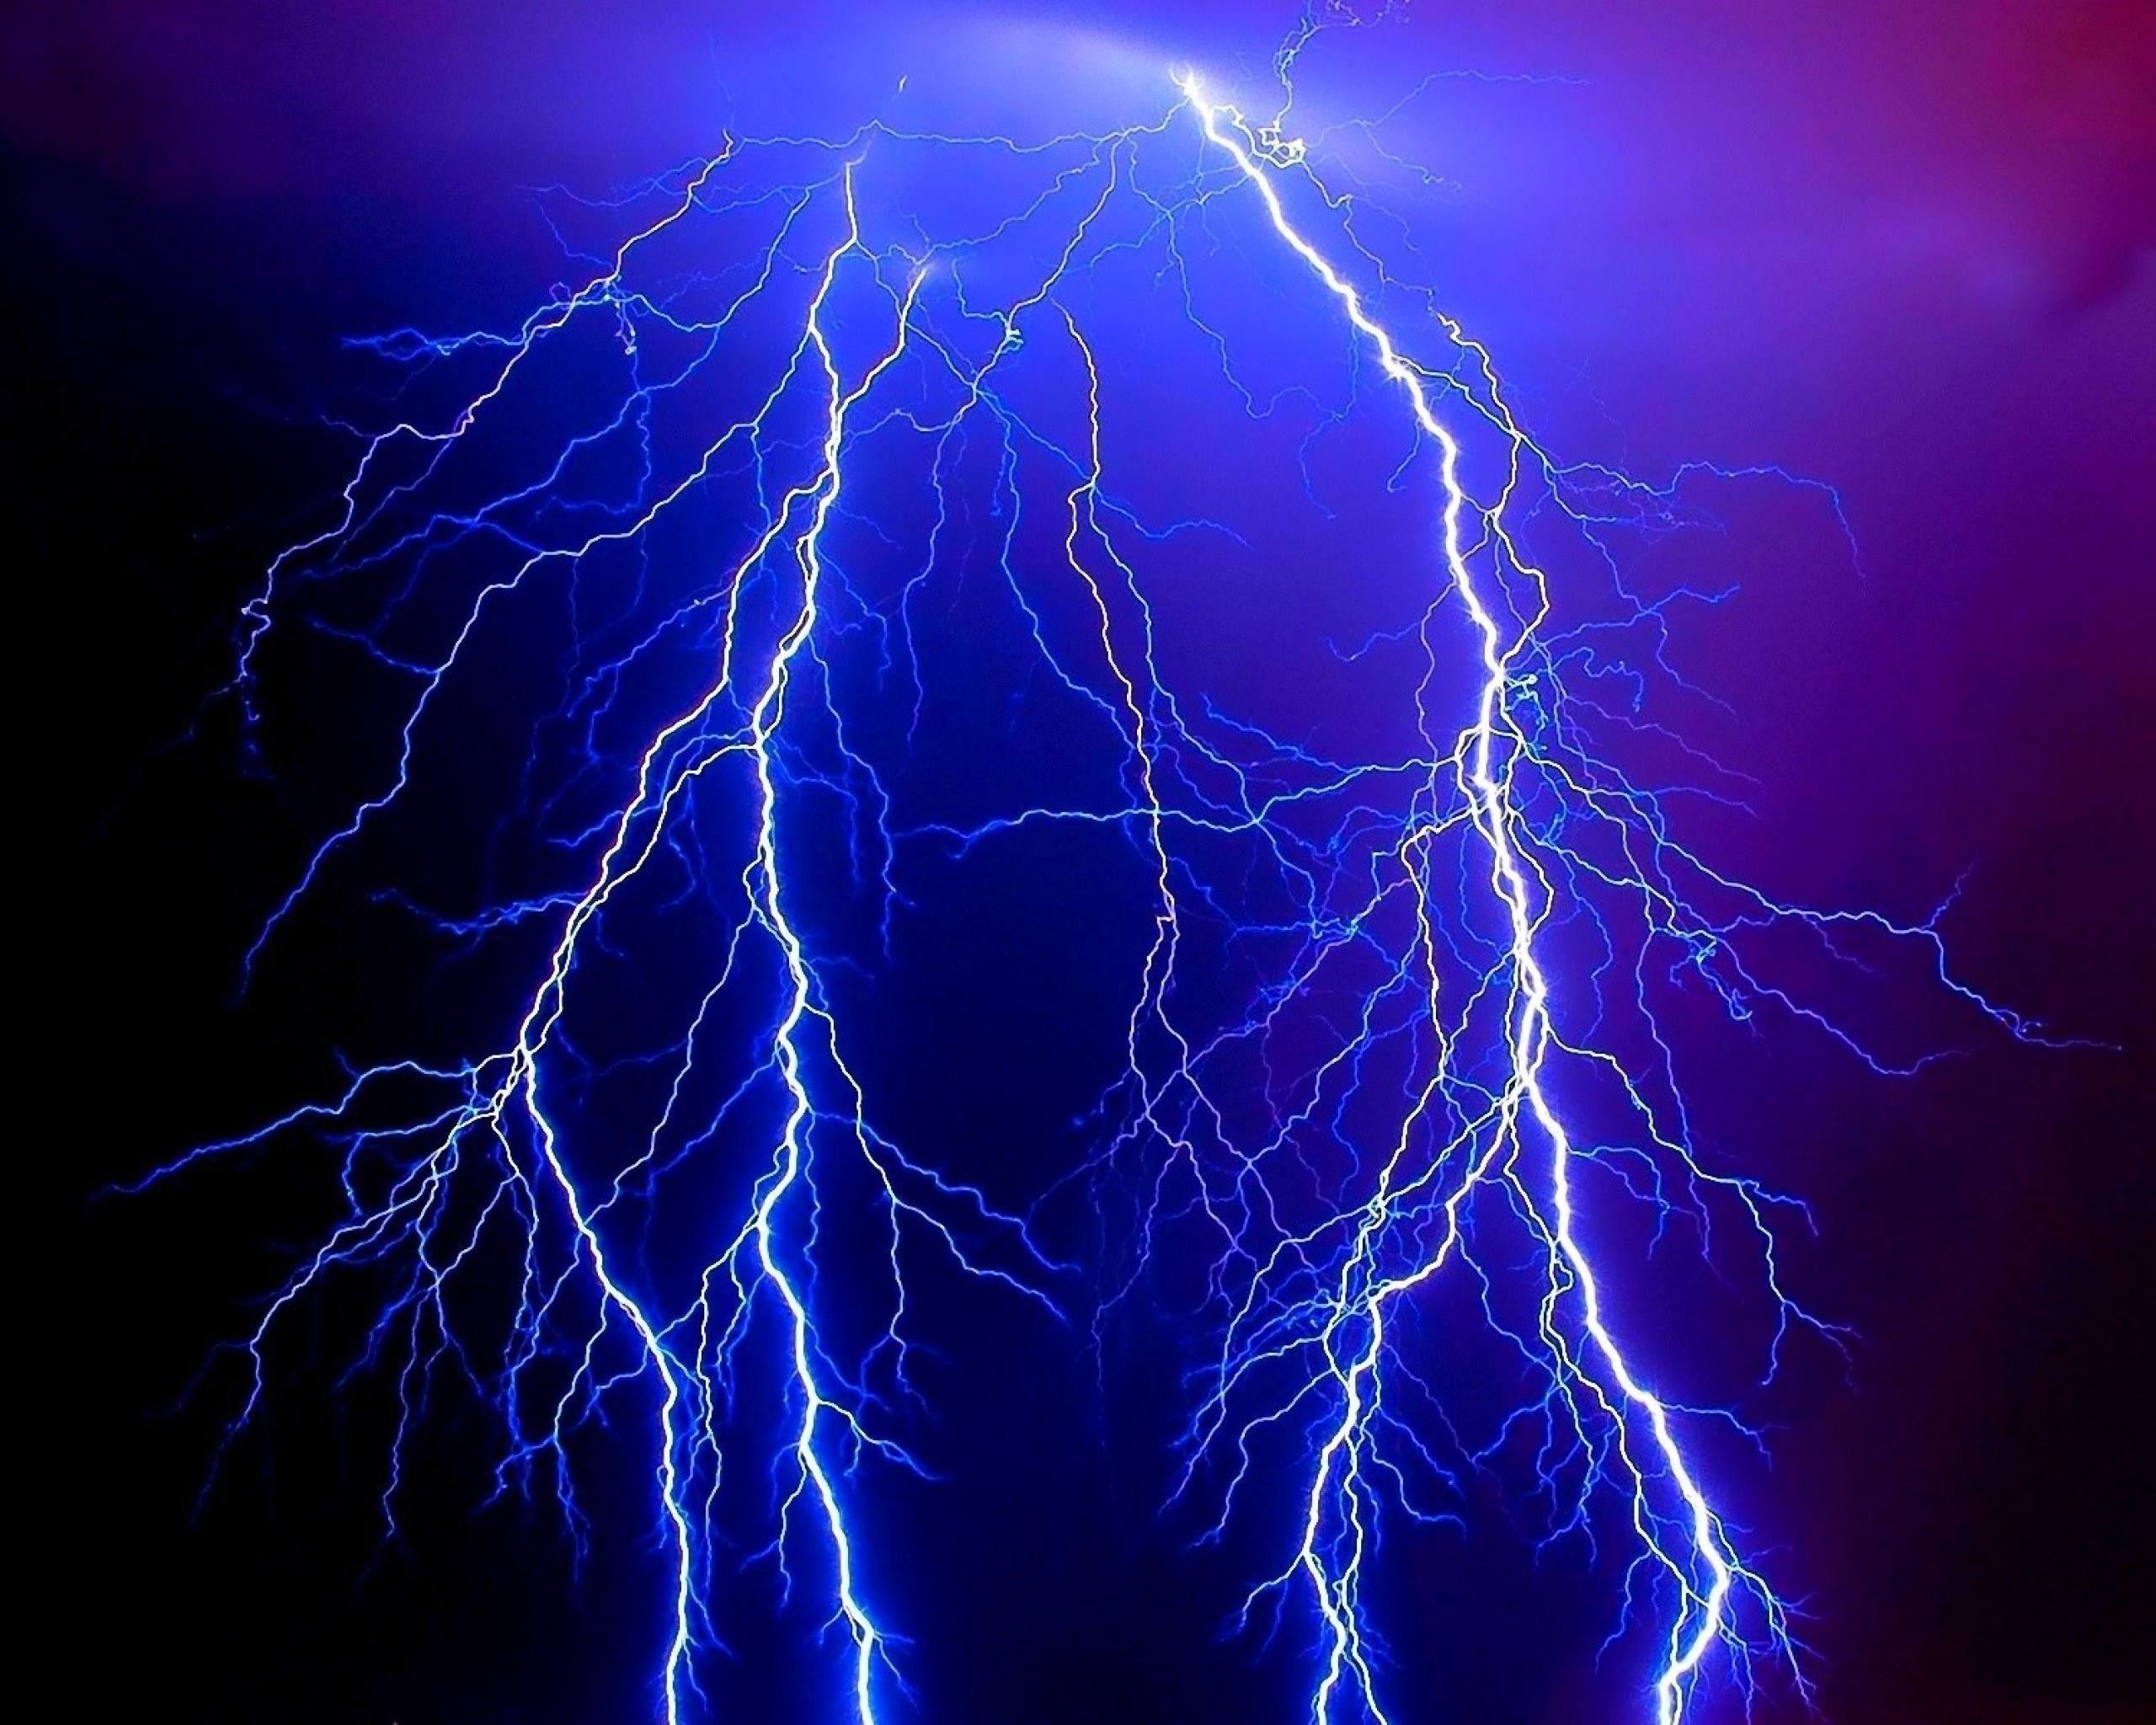 Wallpaper ID 262049  lightning blue thunder and storm hd 4k wallpaper  free download